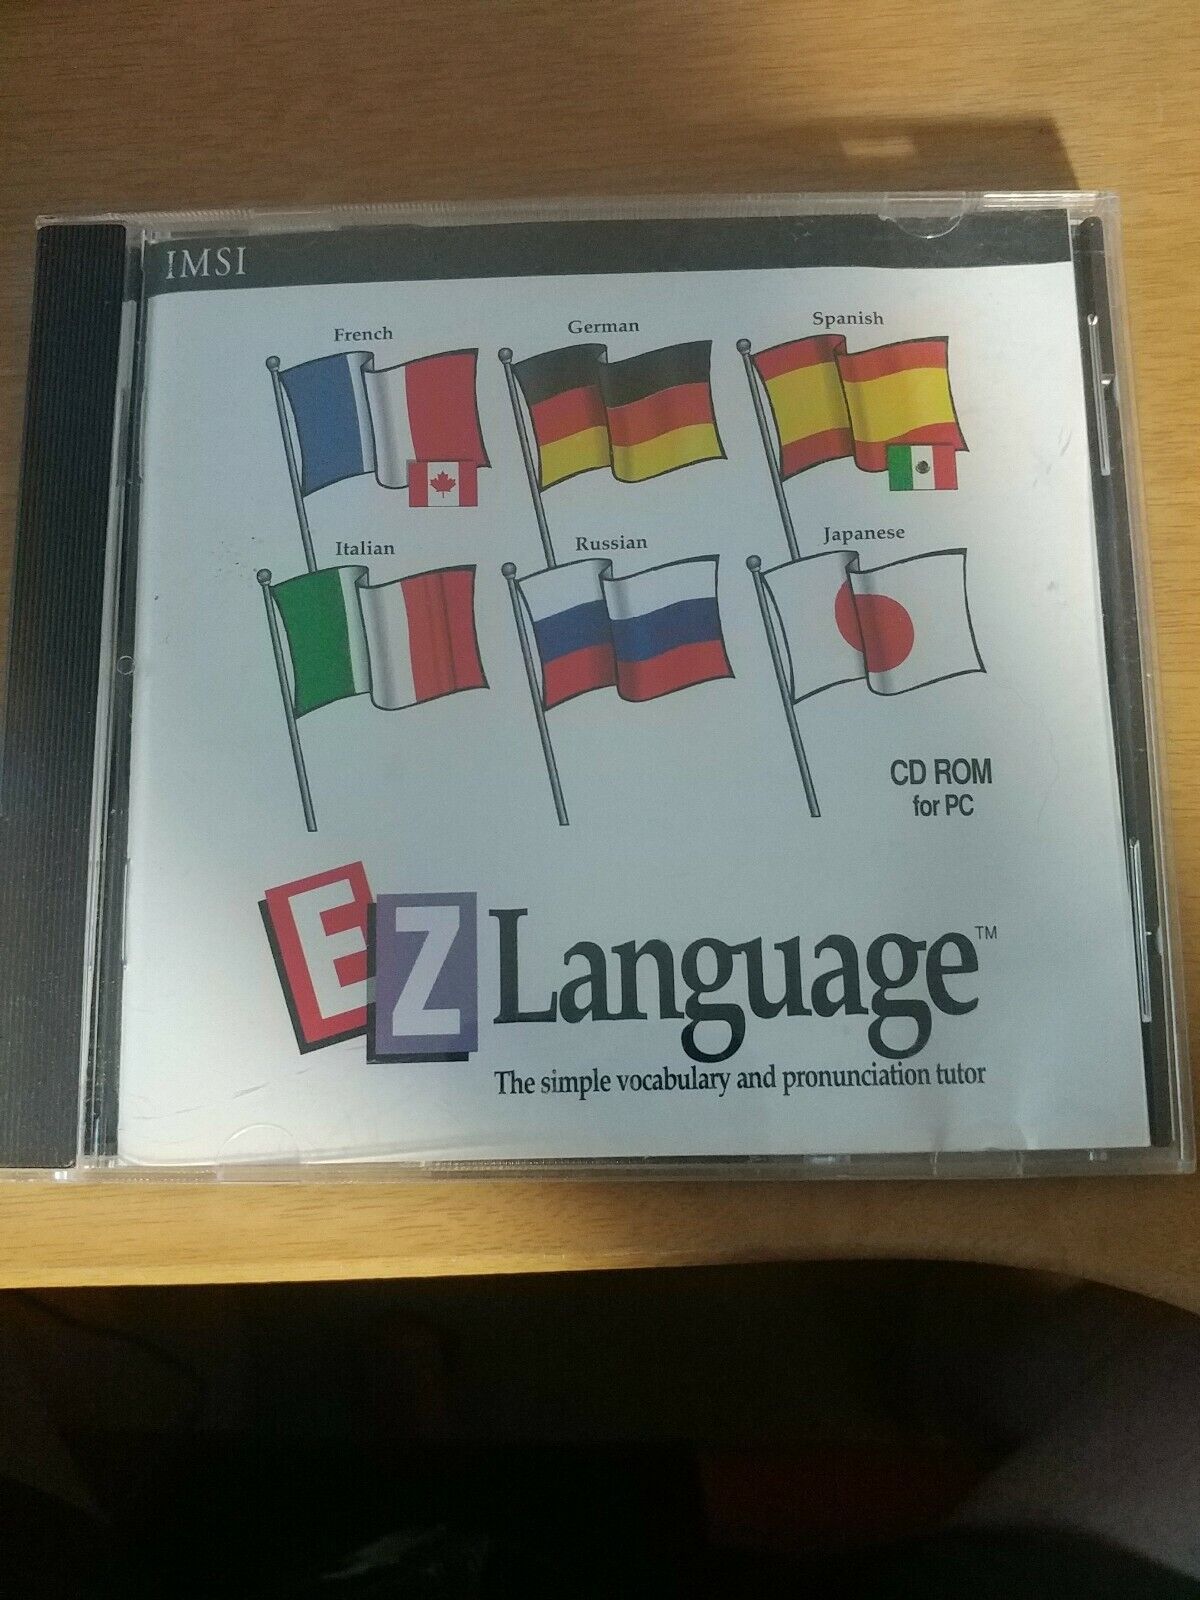 EZ Language-PC CD ROM-French/German/Spanish/Italian/Russian/Japanese